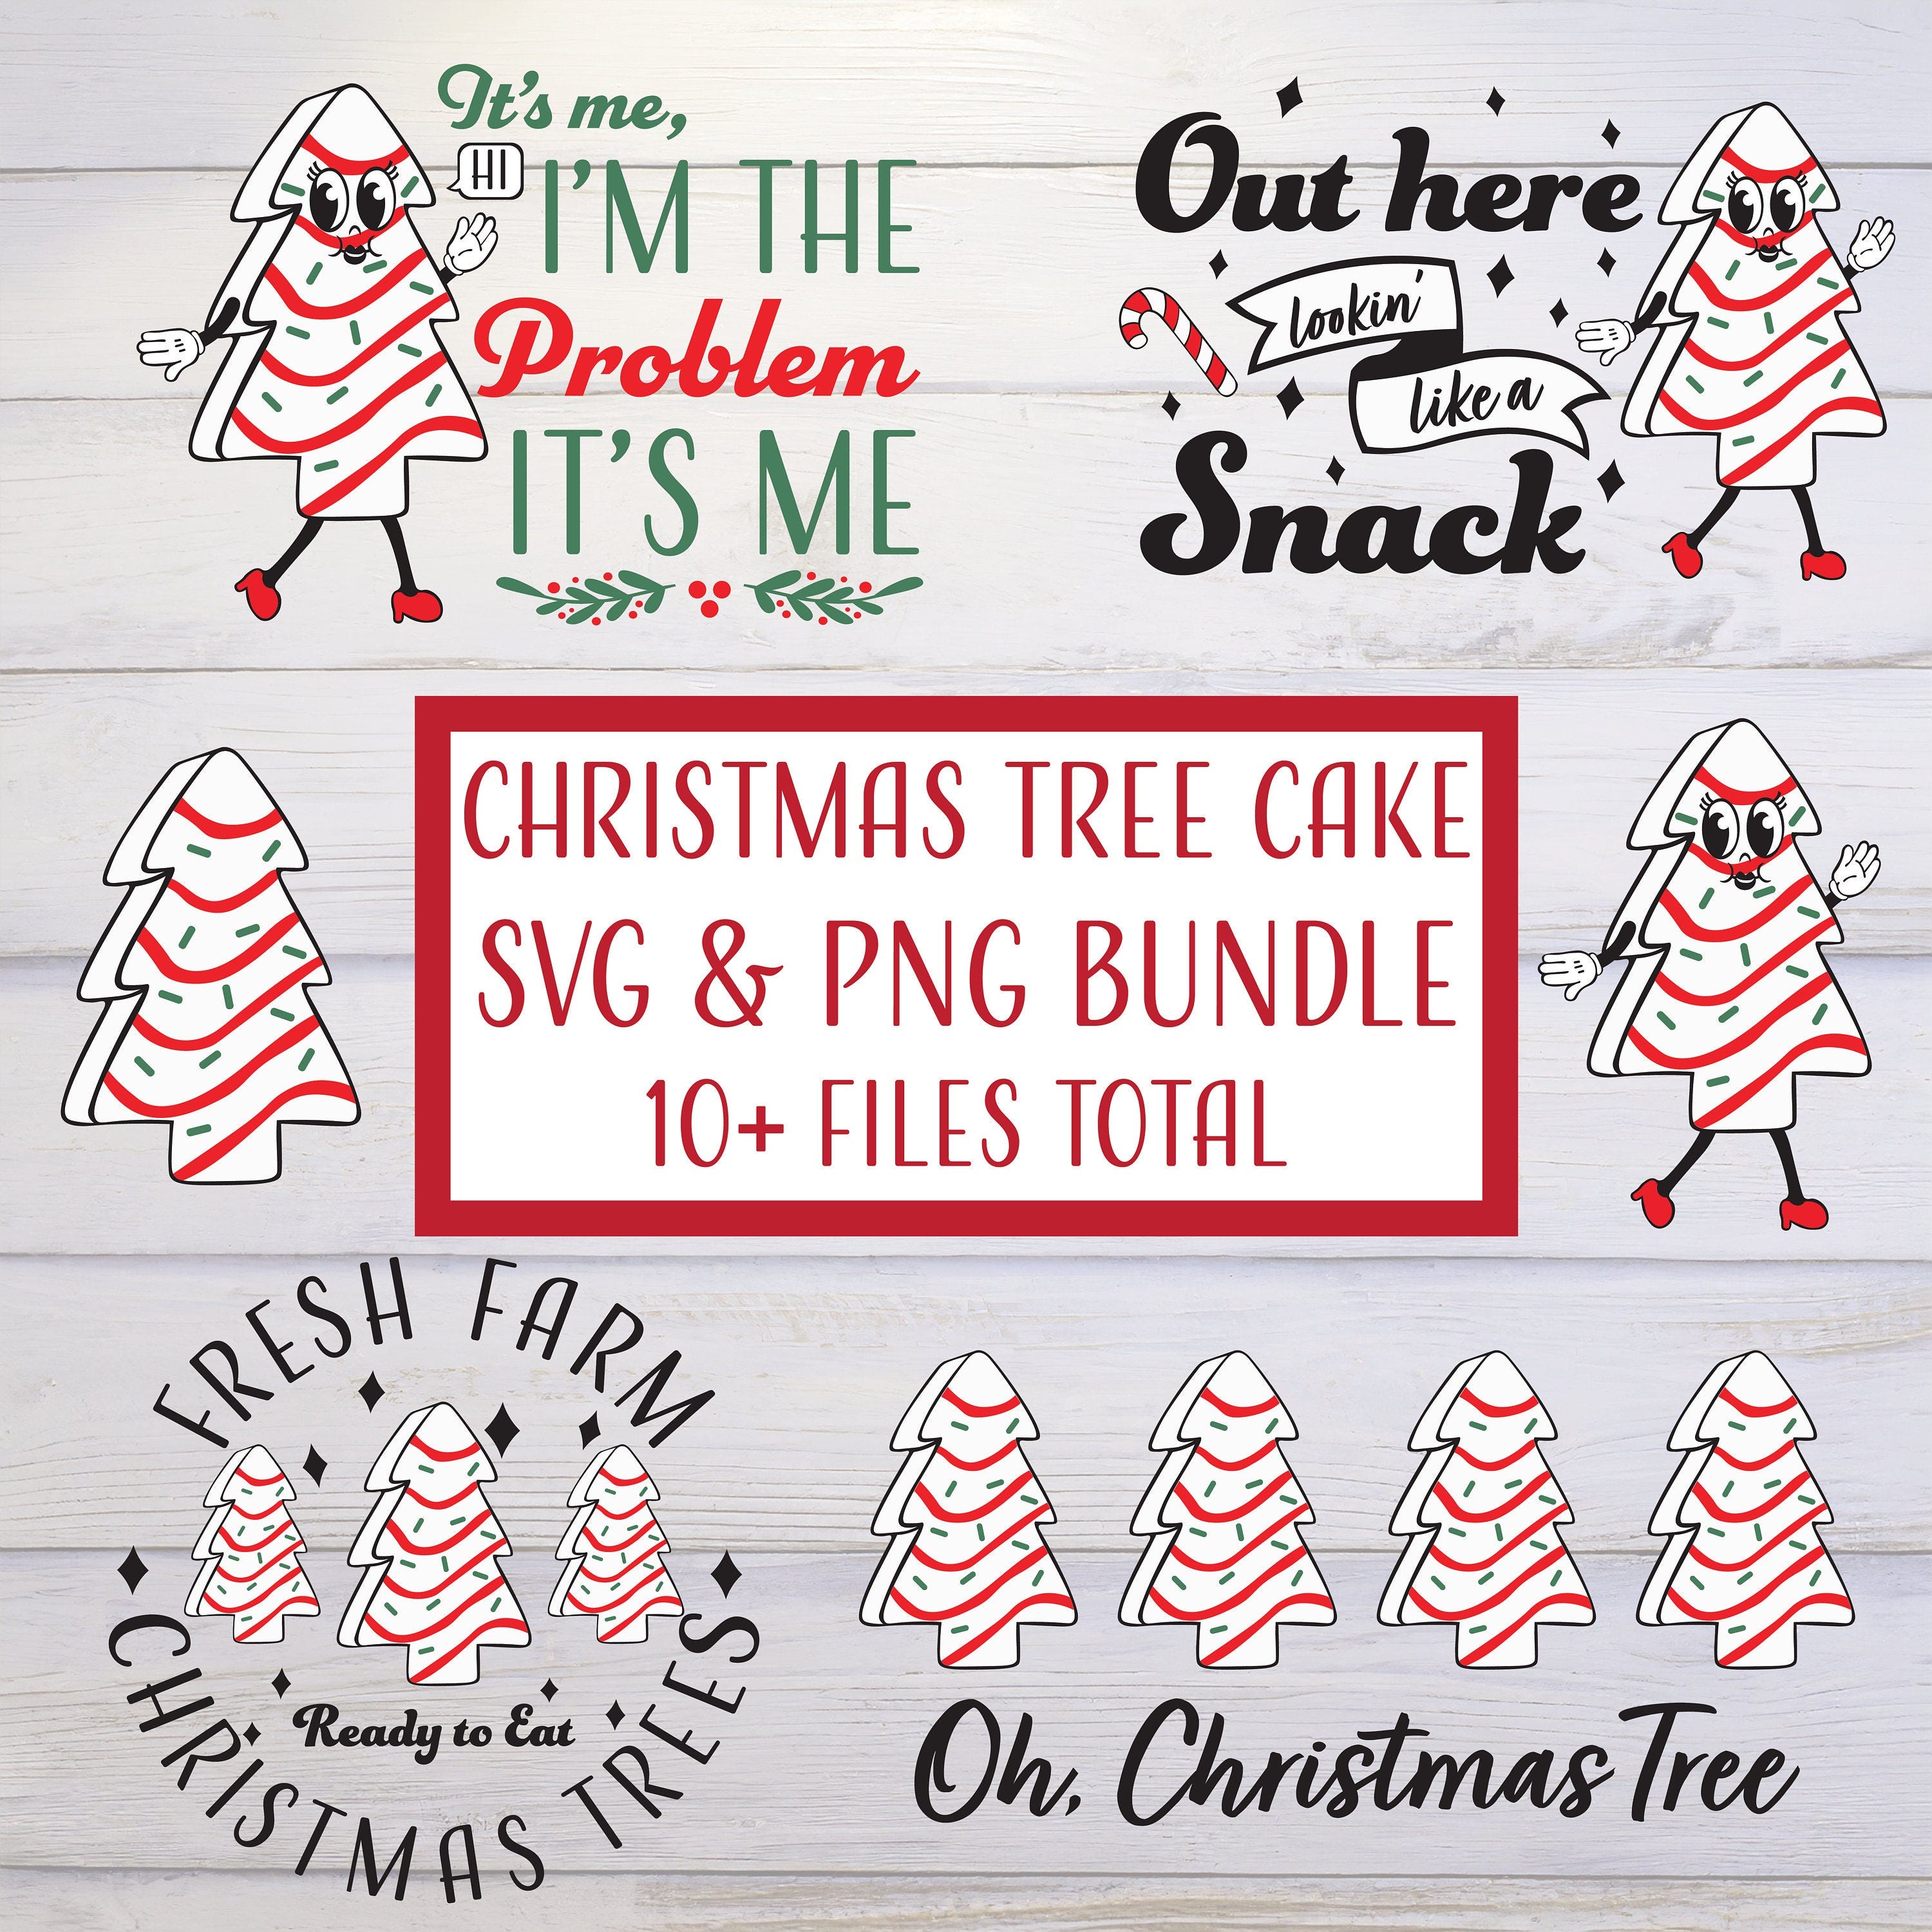 Christmas Tree Cake SVG & PNG Bundle Pack